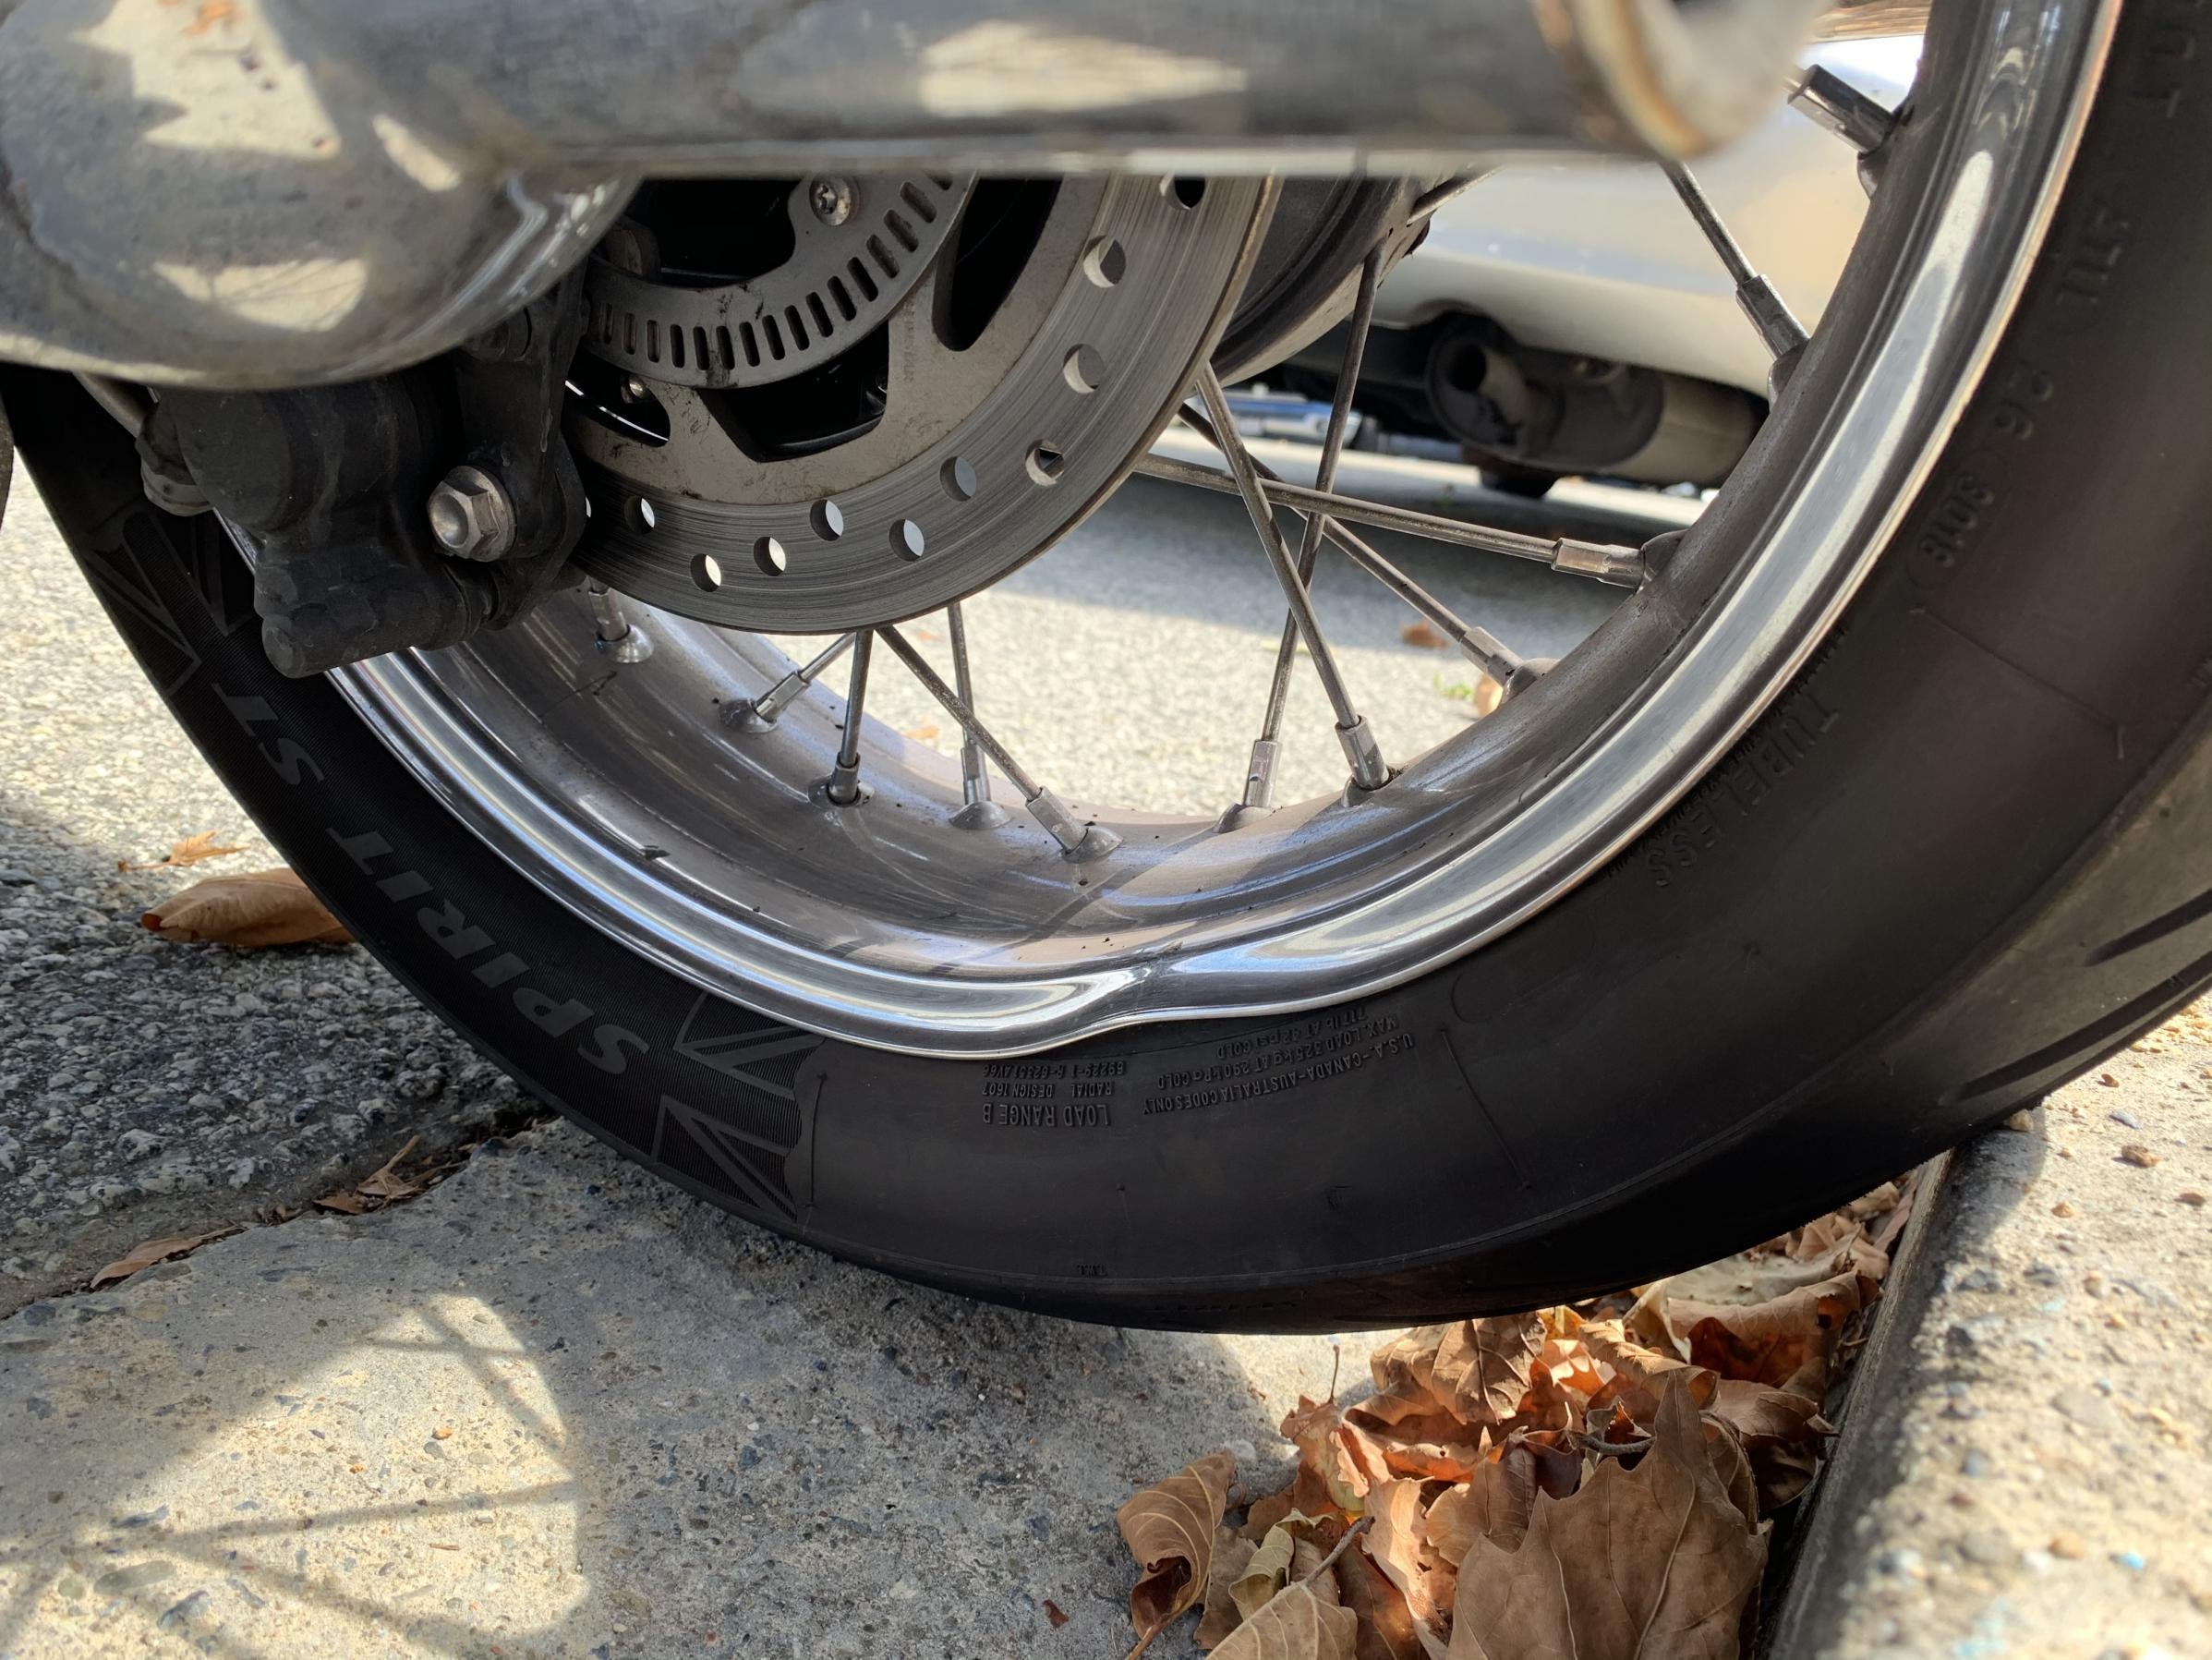 Bent / Dented Rear Rim. How Serious? | Triumph Rat Motorcycle Forums